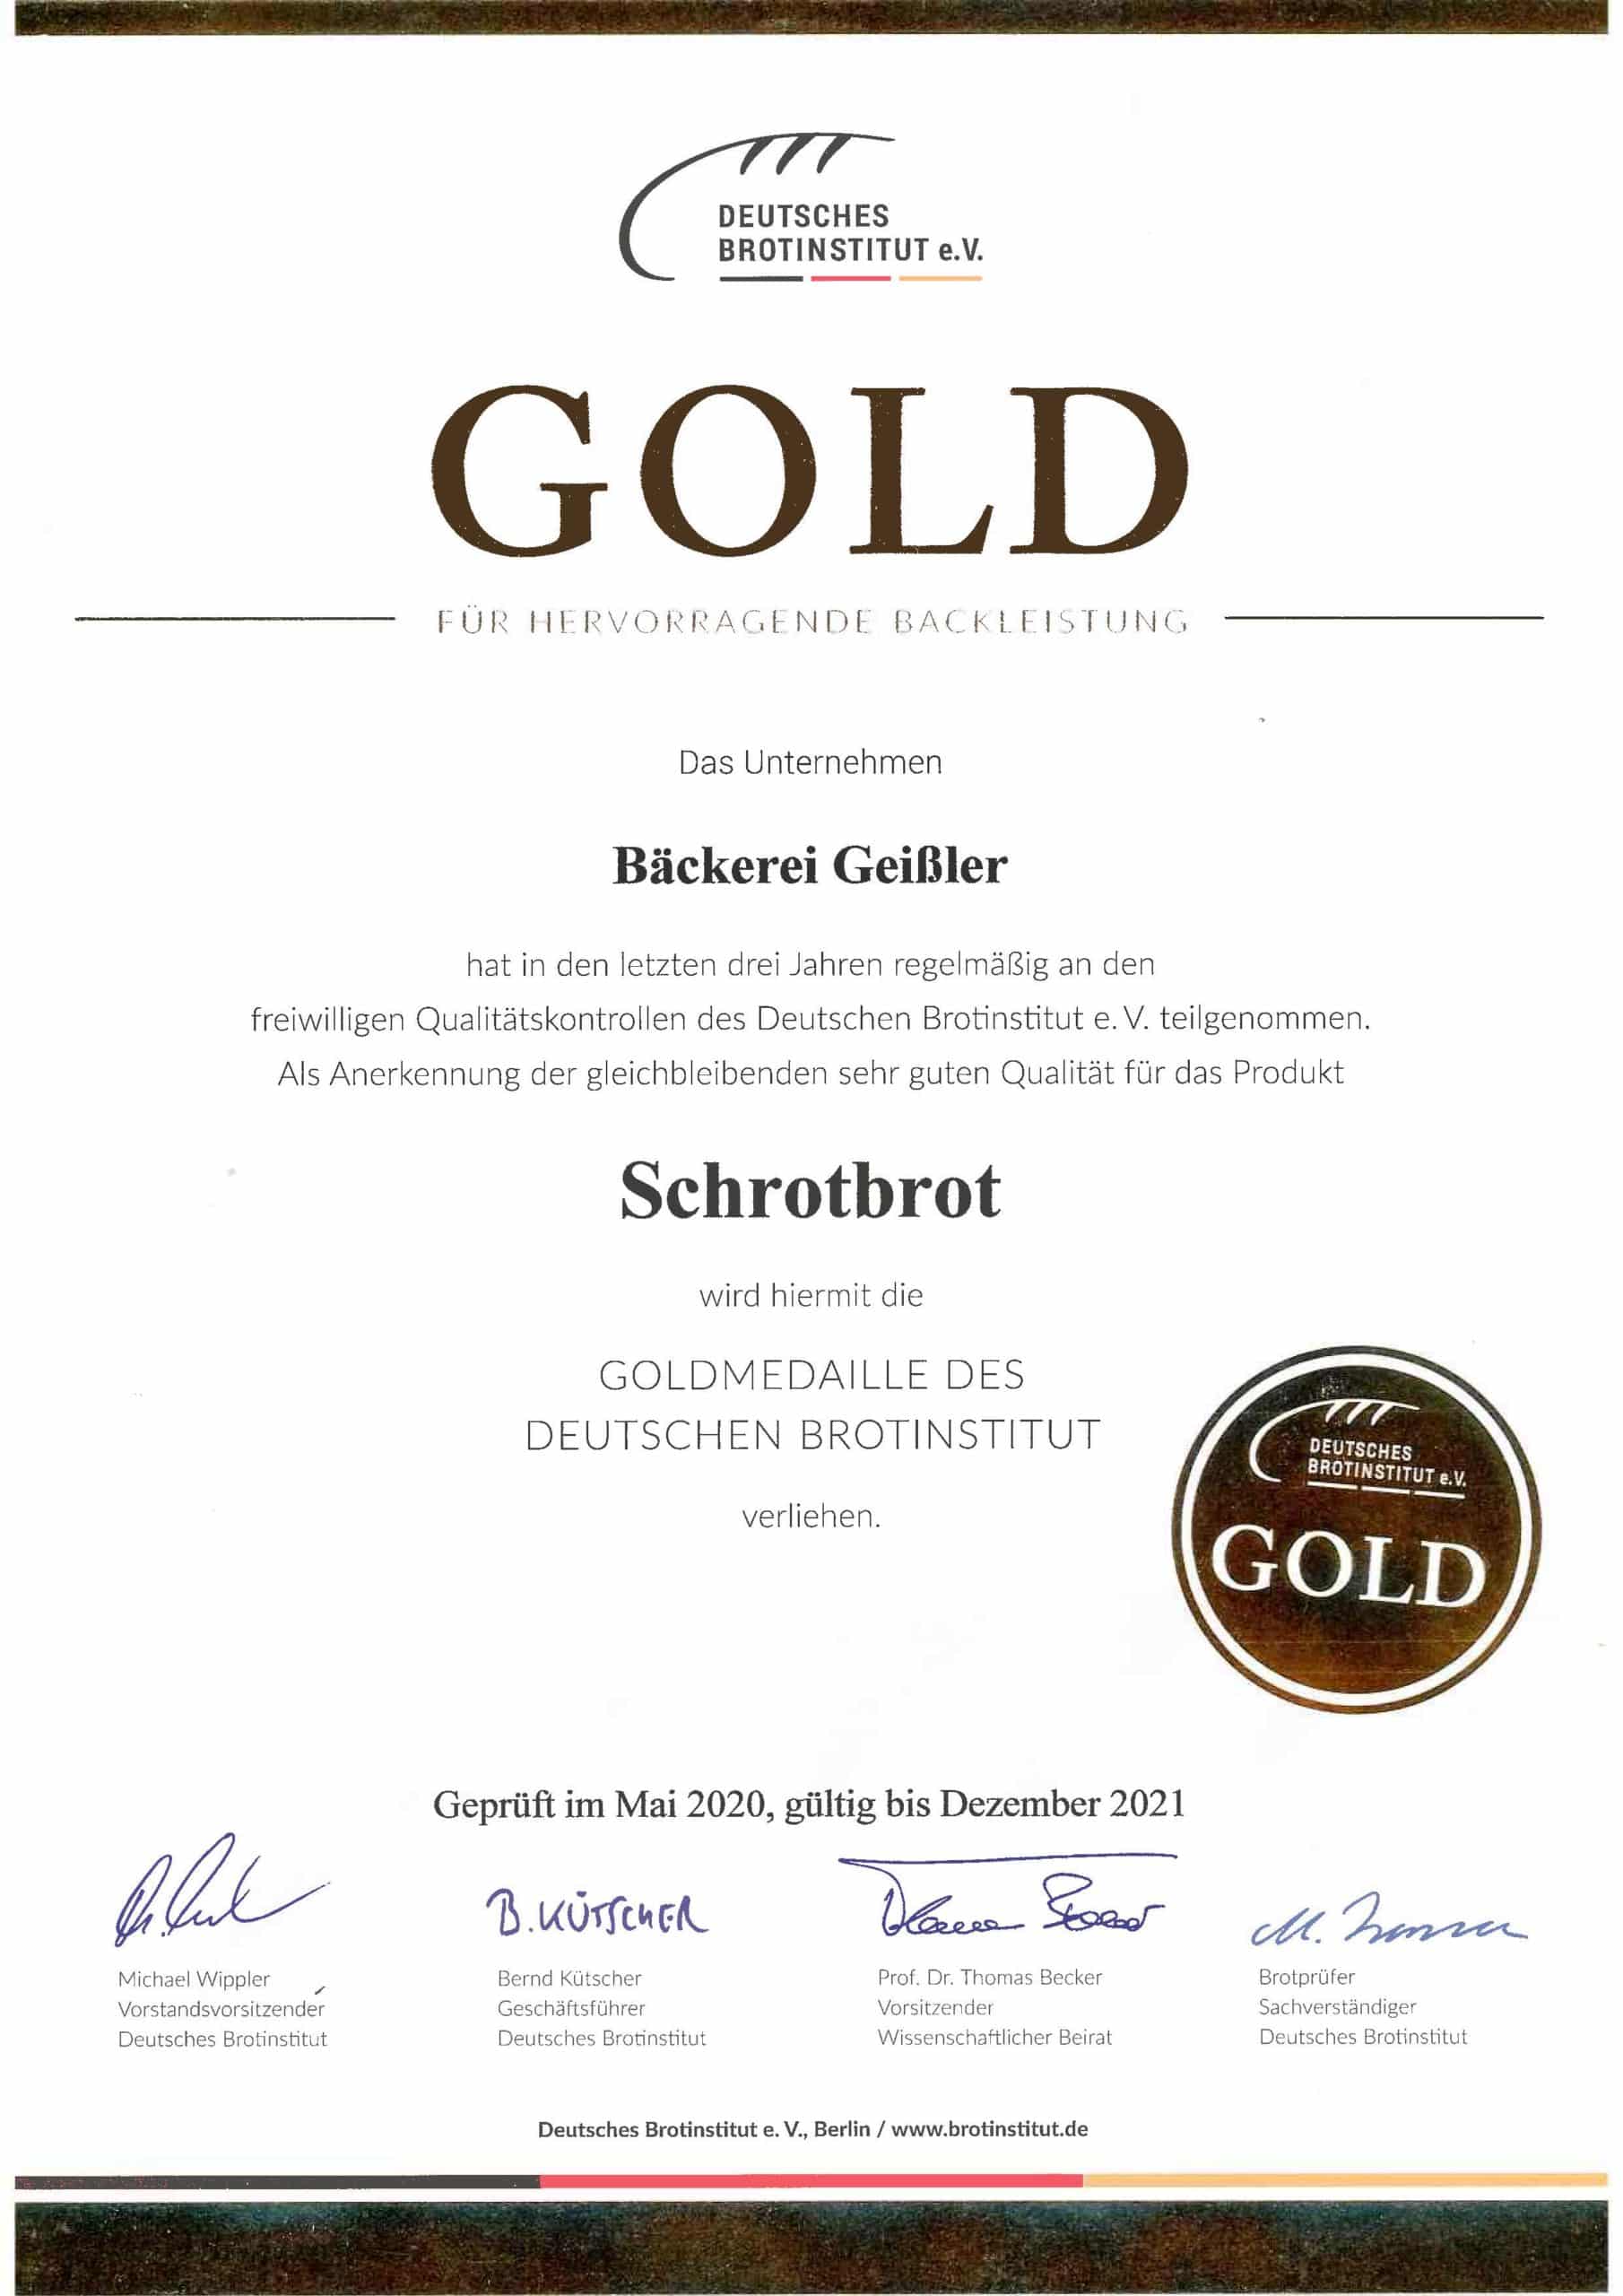 20200617_Schrotbrot_Goldmedaille_Bortinstitut-scaled.jpg